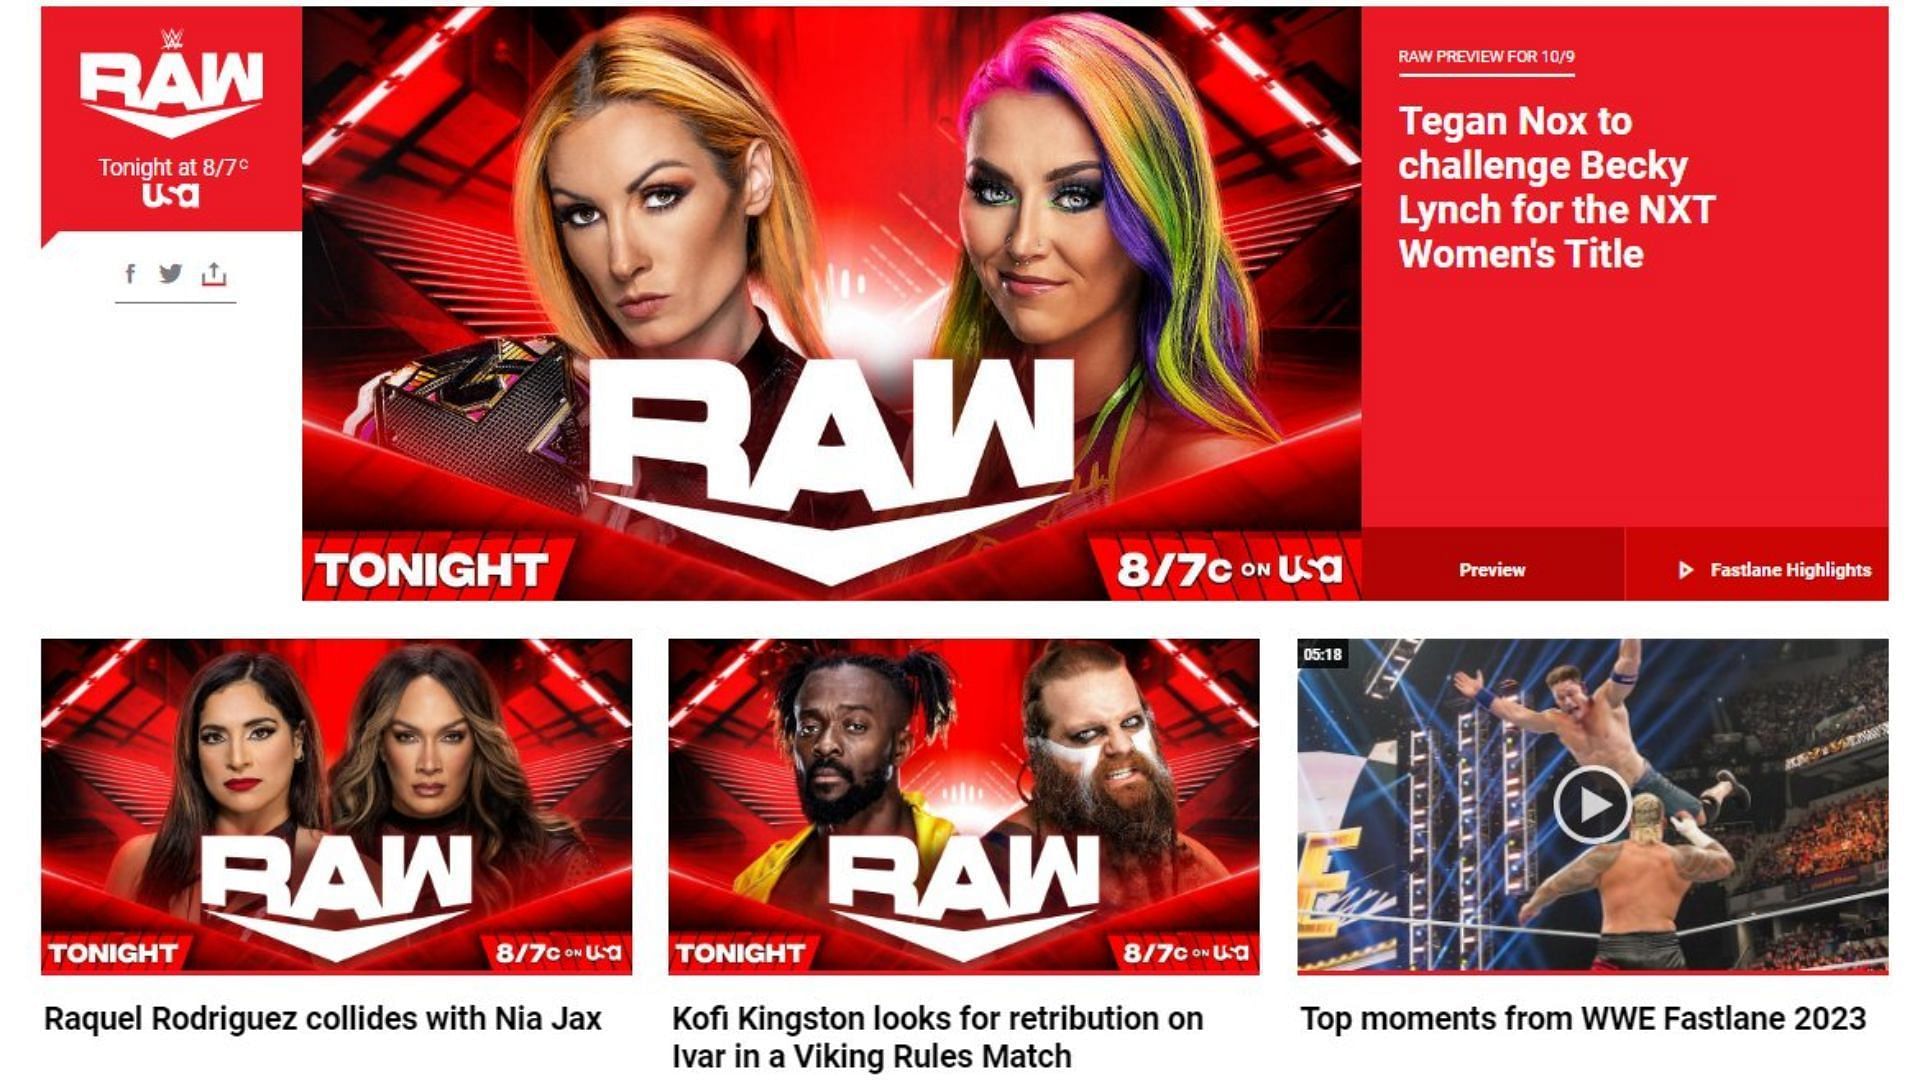 Becky Lynch vs. Tegan Nox will happen on Monday Night RAW